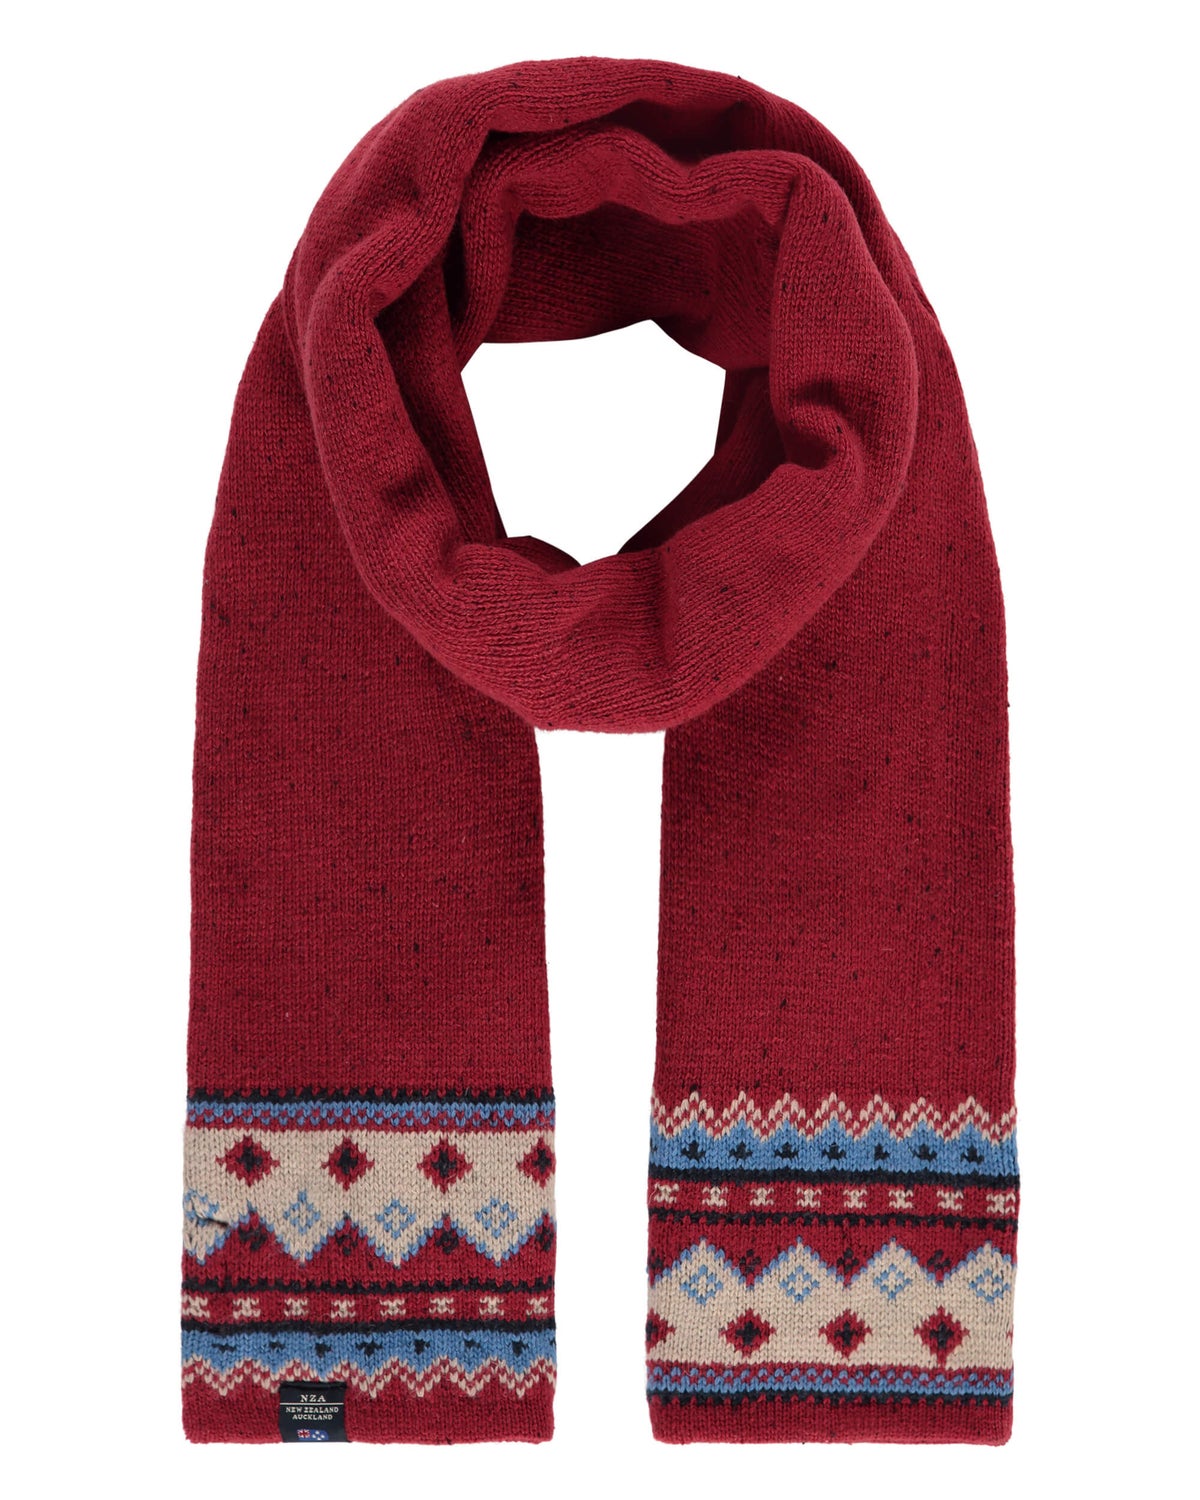 Gebreide sjaal Otere - Cardinal Red